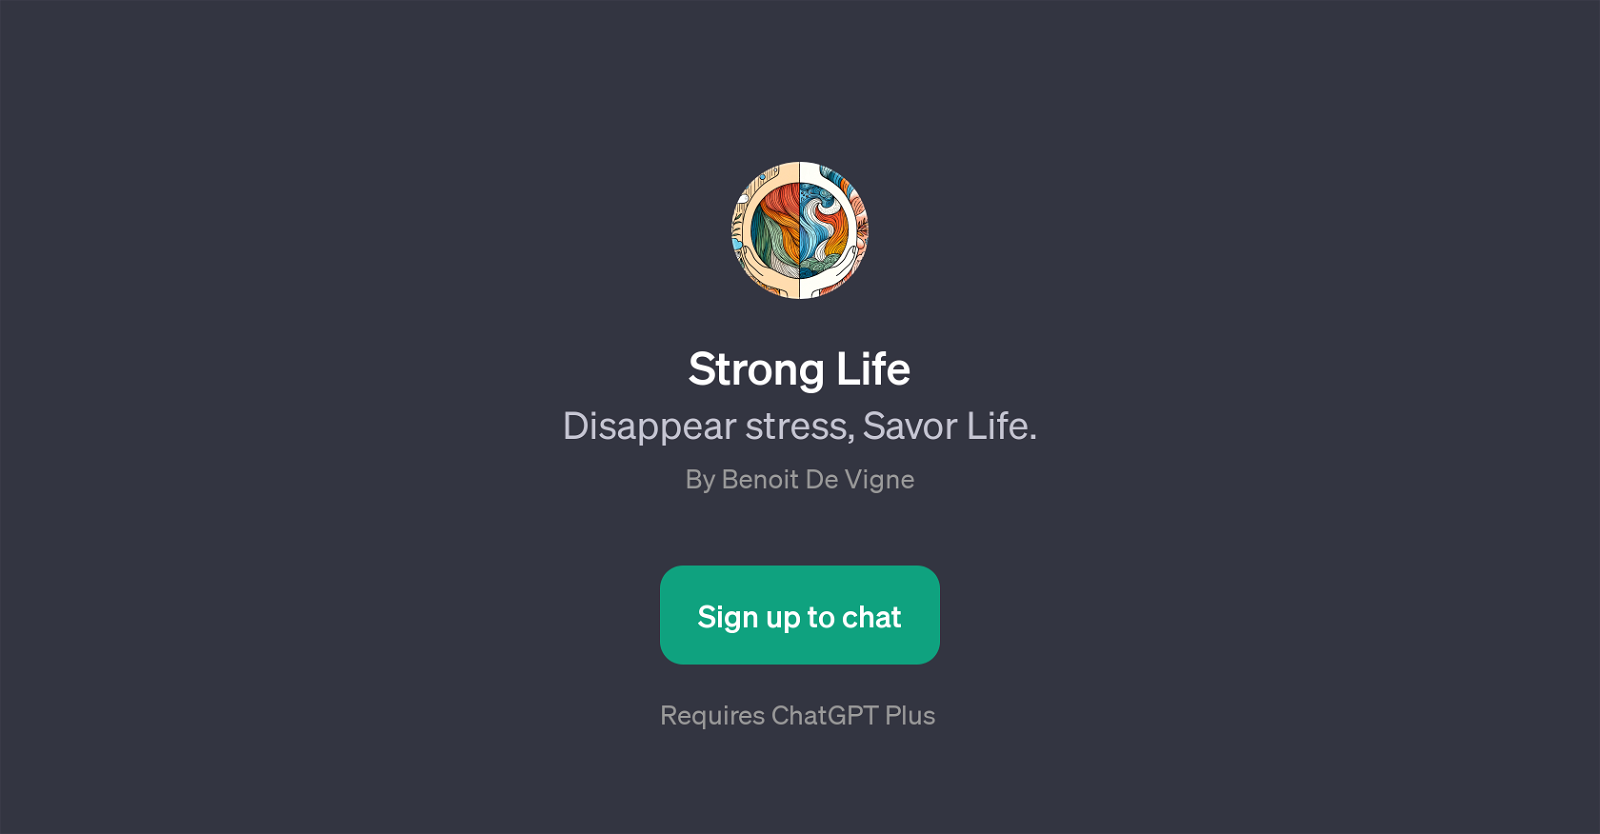 Strong Life website